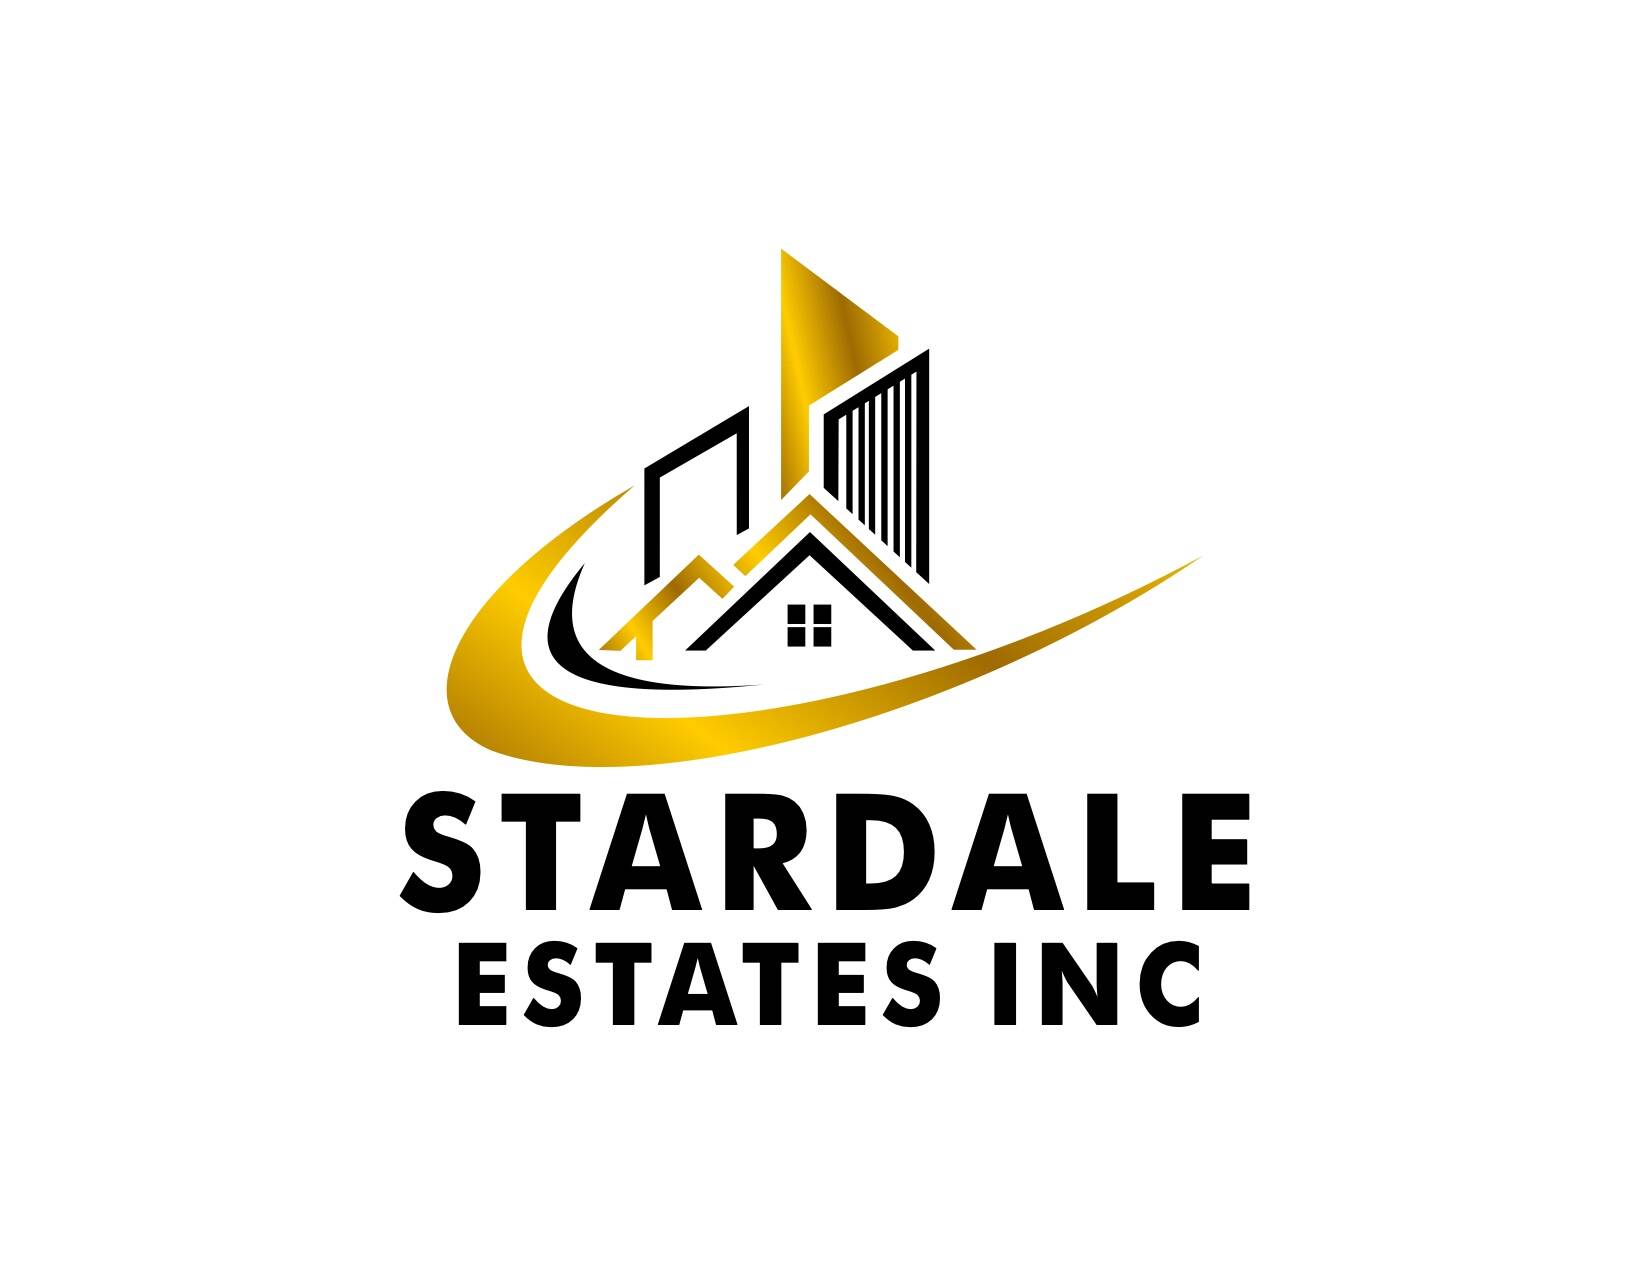 Stardale Estates INC